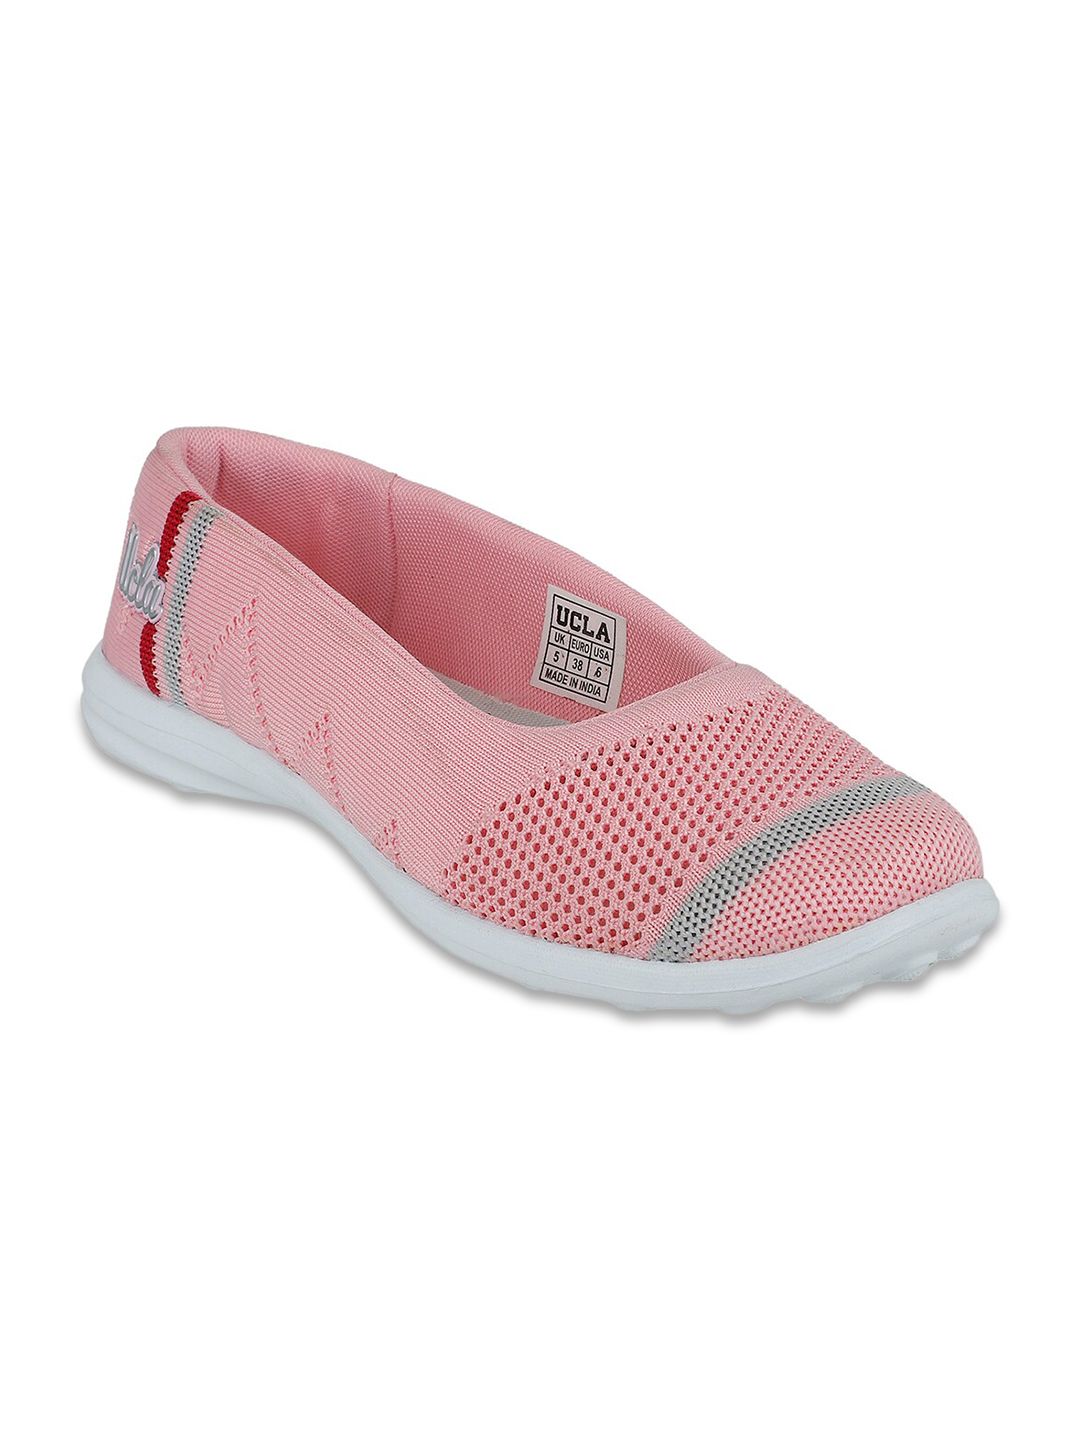 UCLA Women Pink Mesh Walking Non-Marking Shoes Price in India